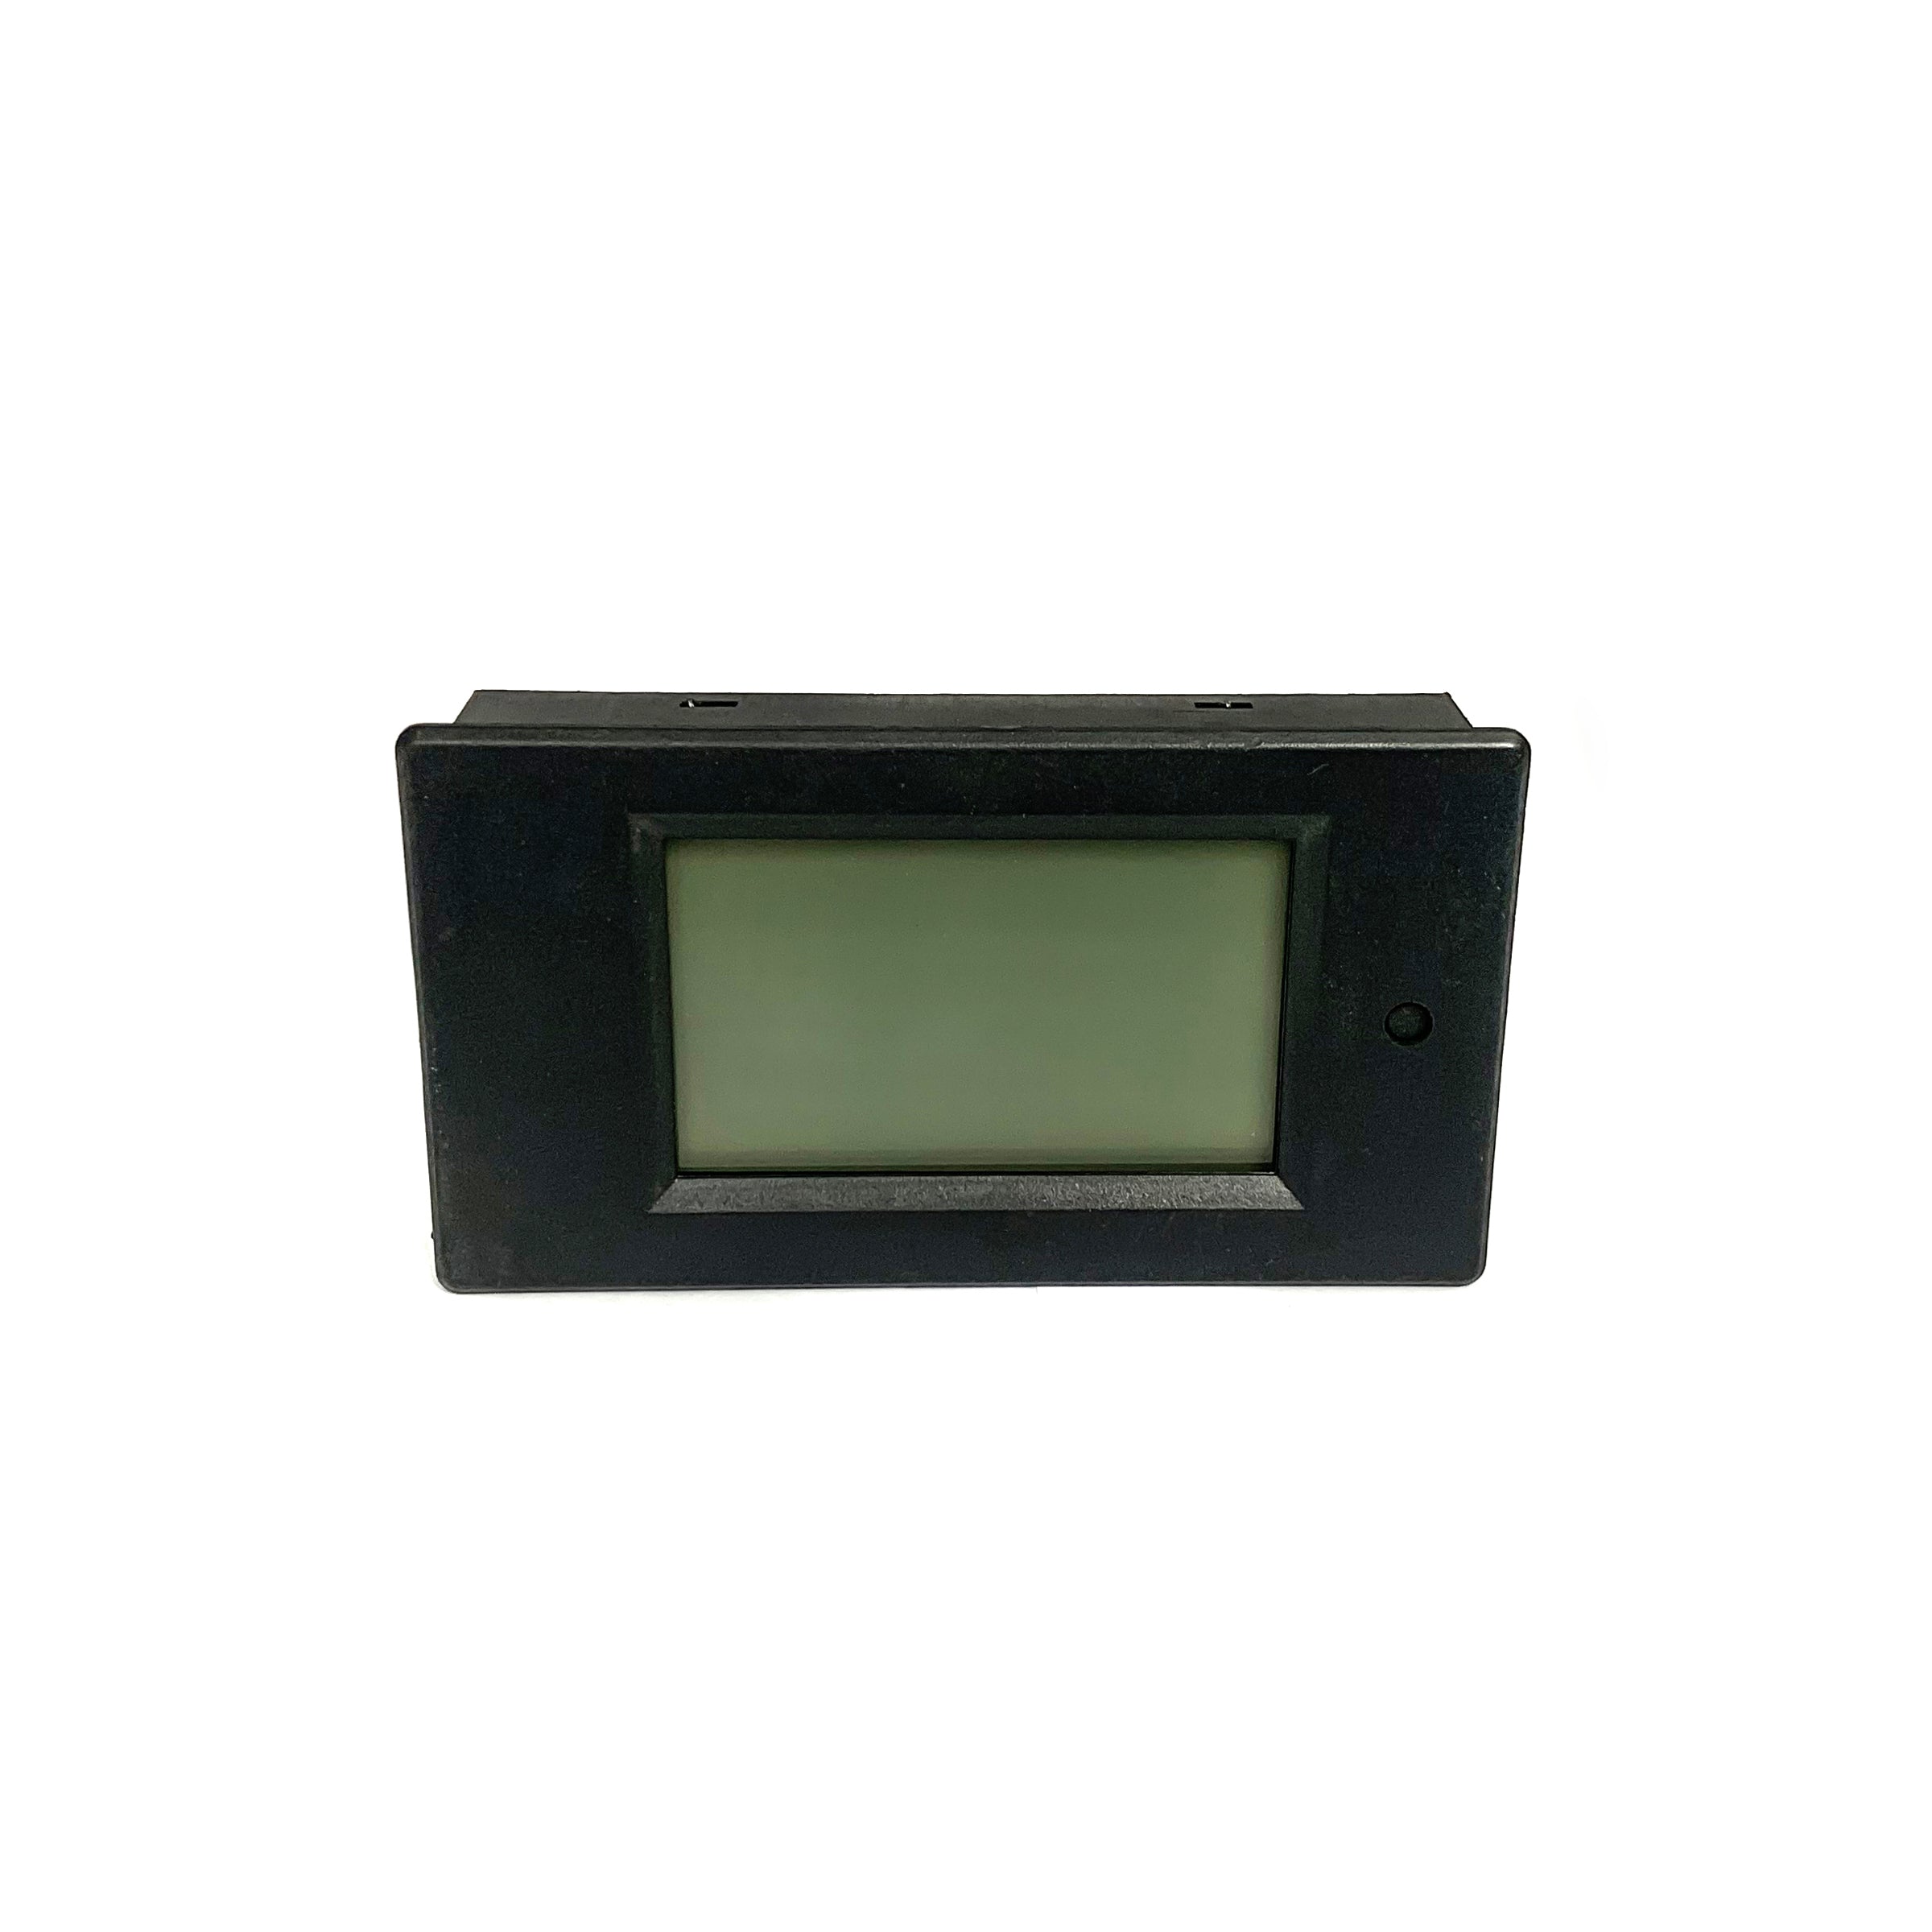 LCD Display for 480mm concrete floor grinder